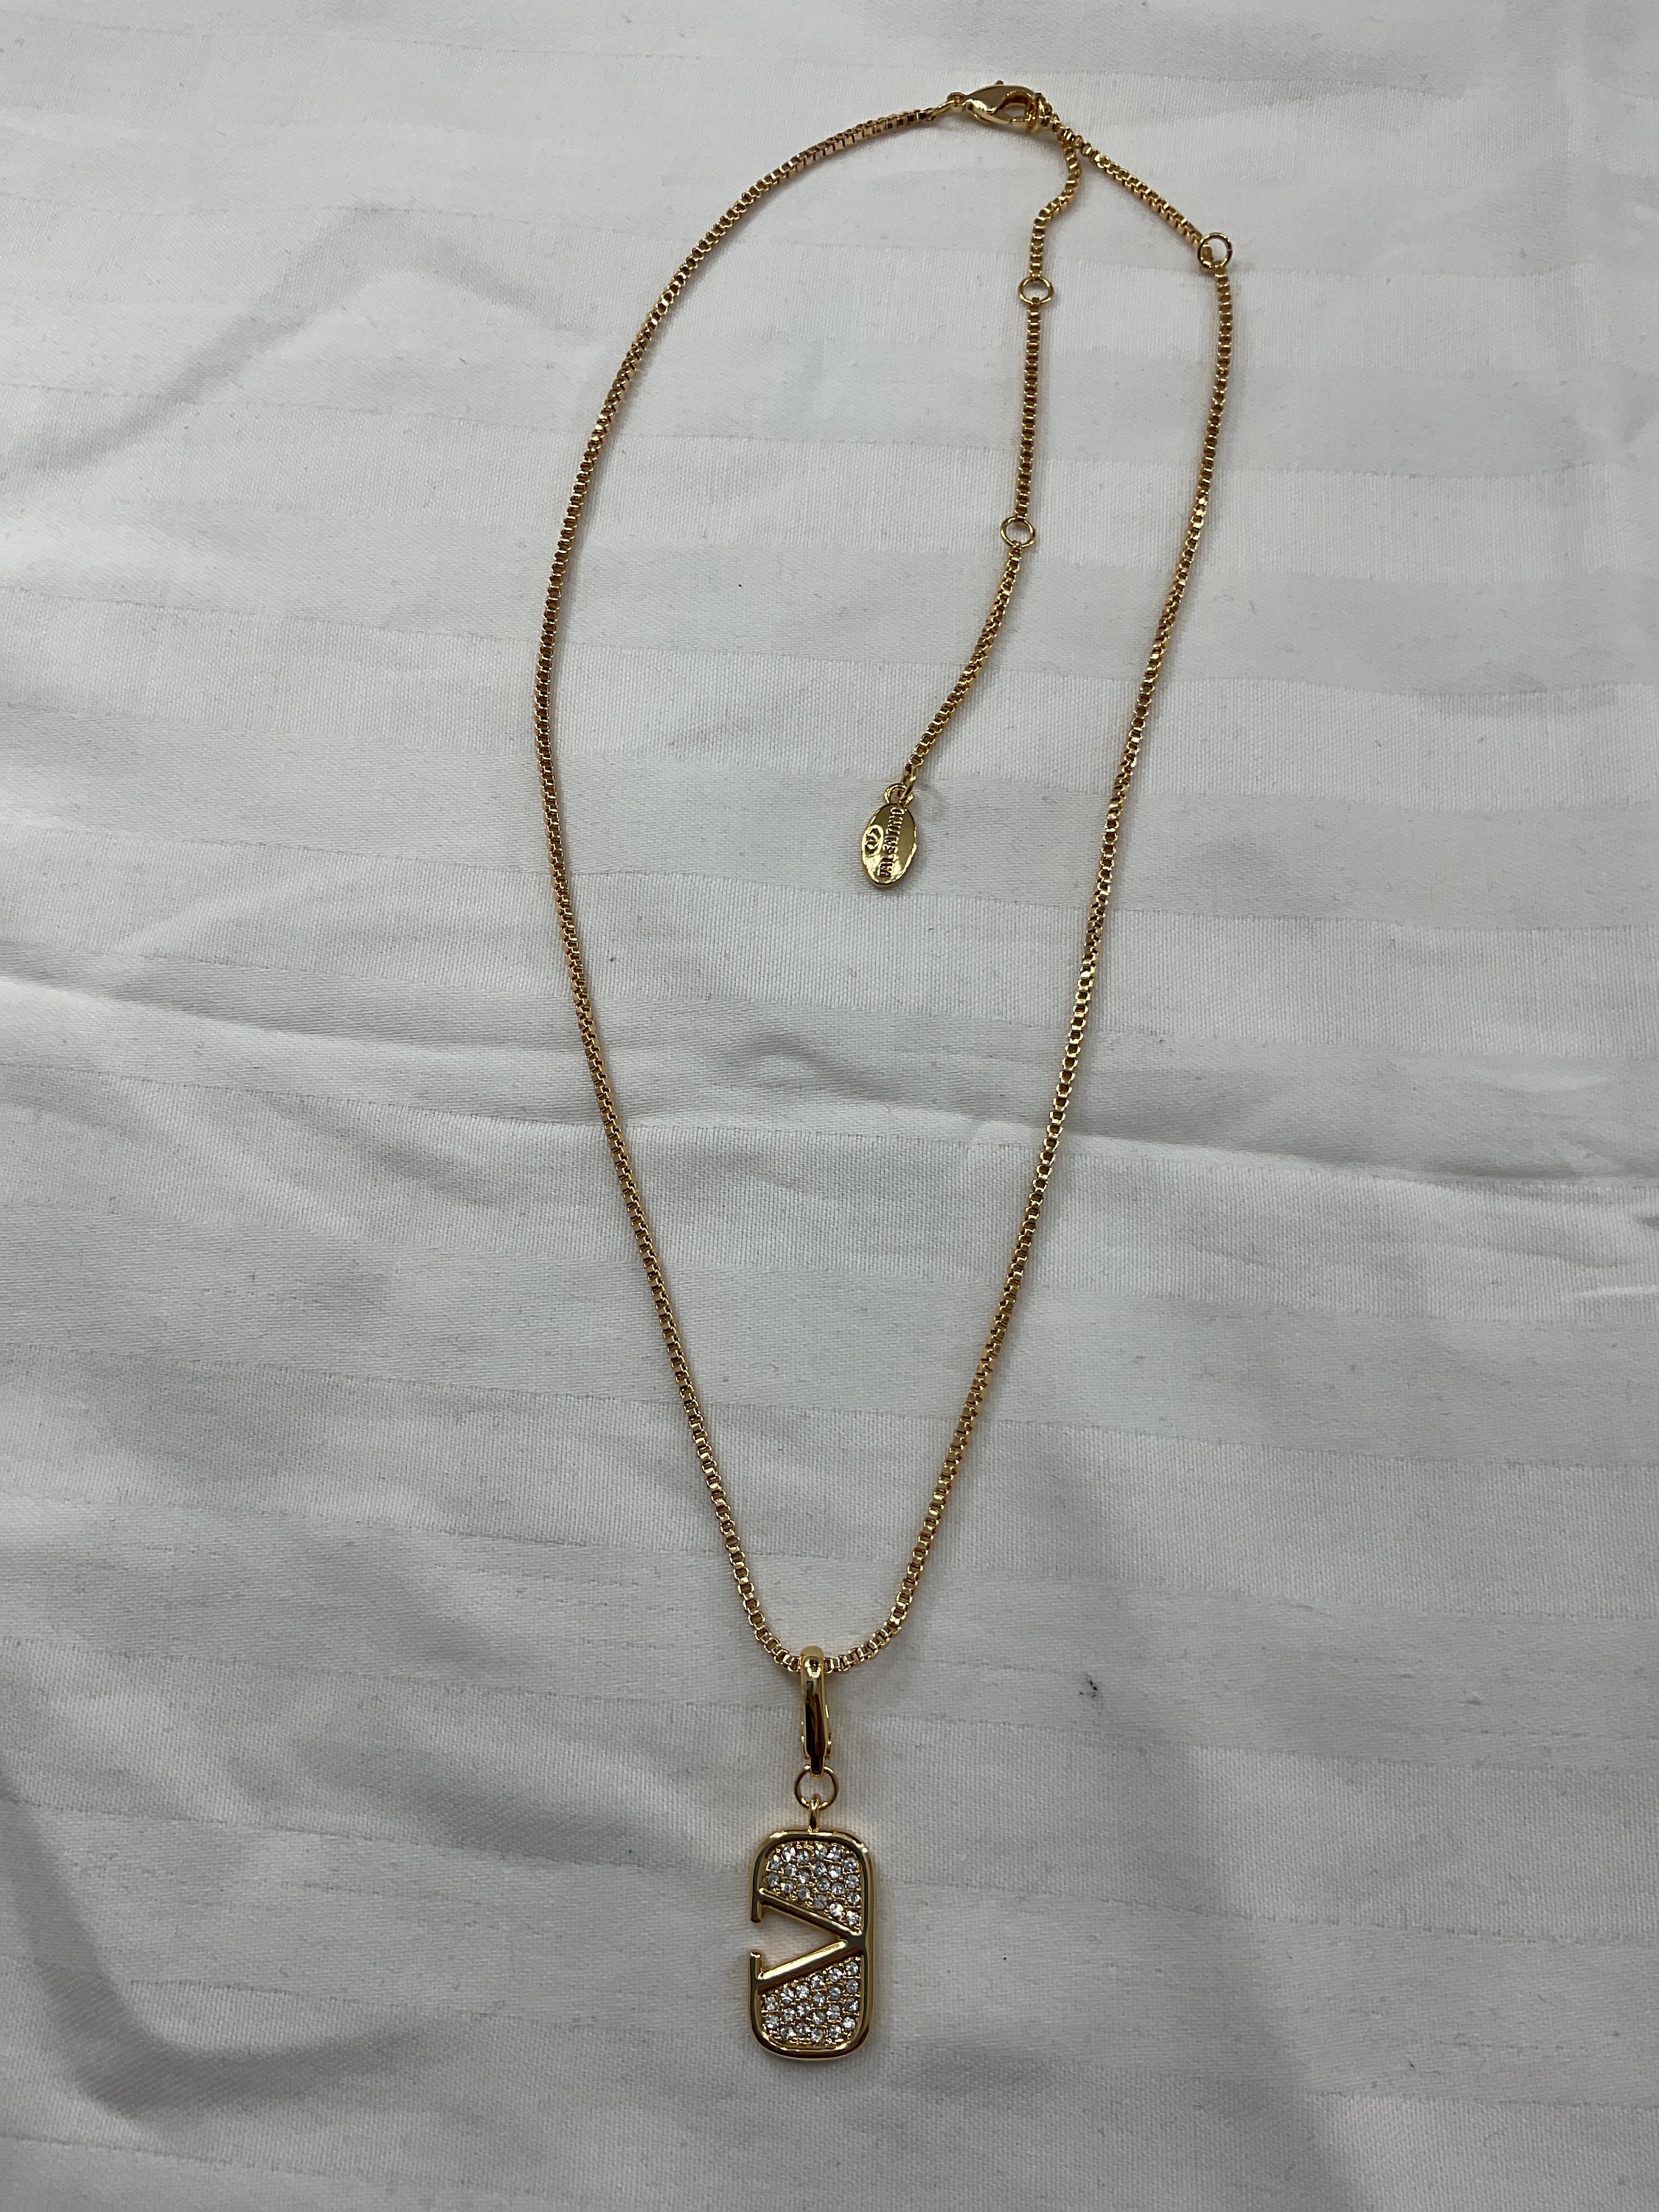 Louis Vuitton Vintage Repurposed Necklace Gold - $166 (44% Off